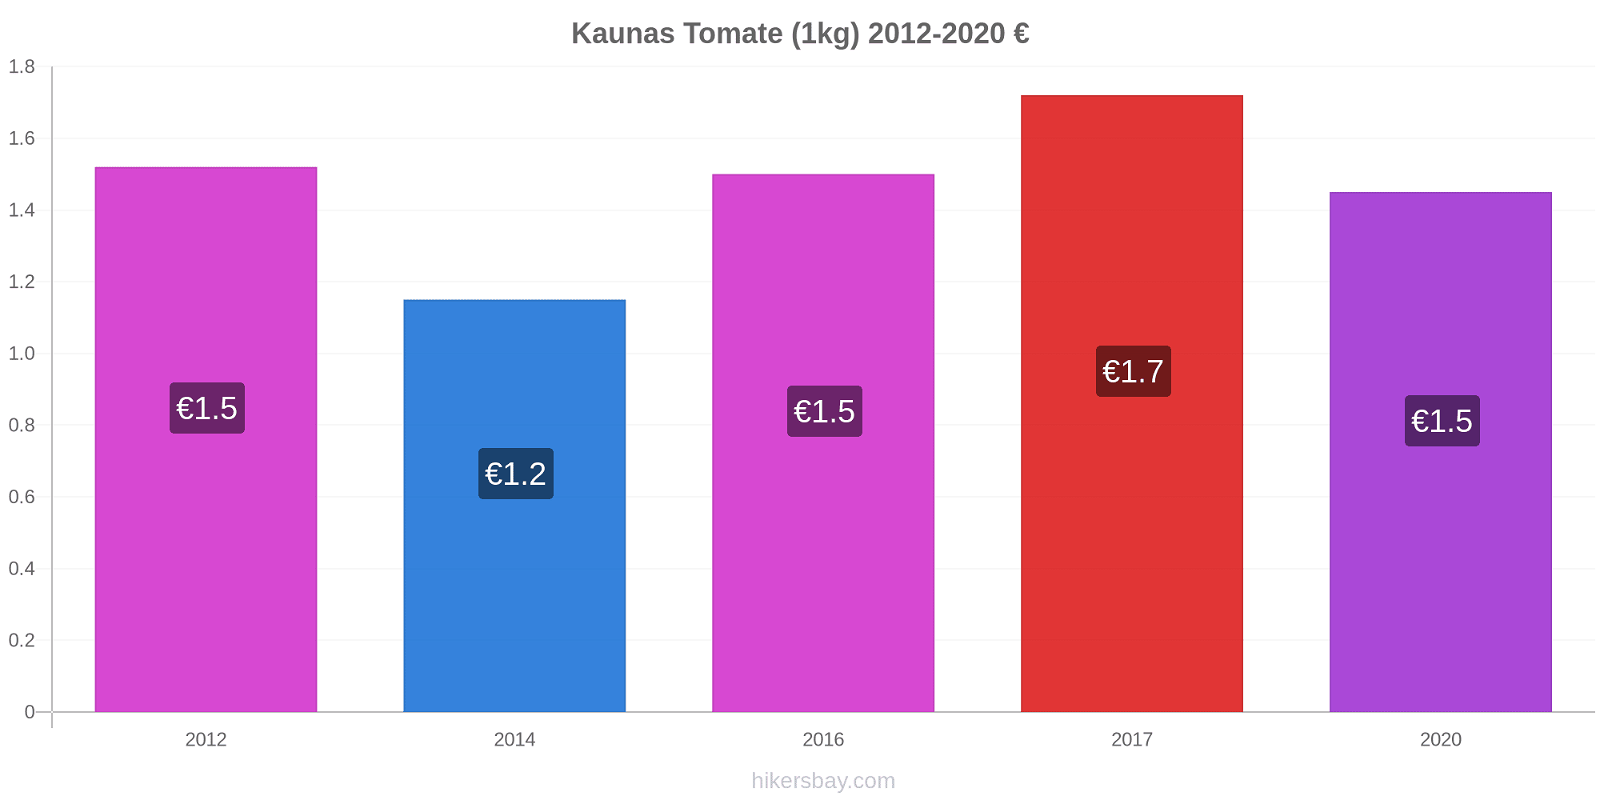 Kaunas changements de prix Tomate (1kg) hikersbay.com